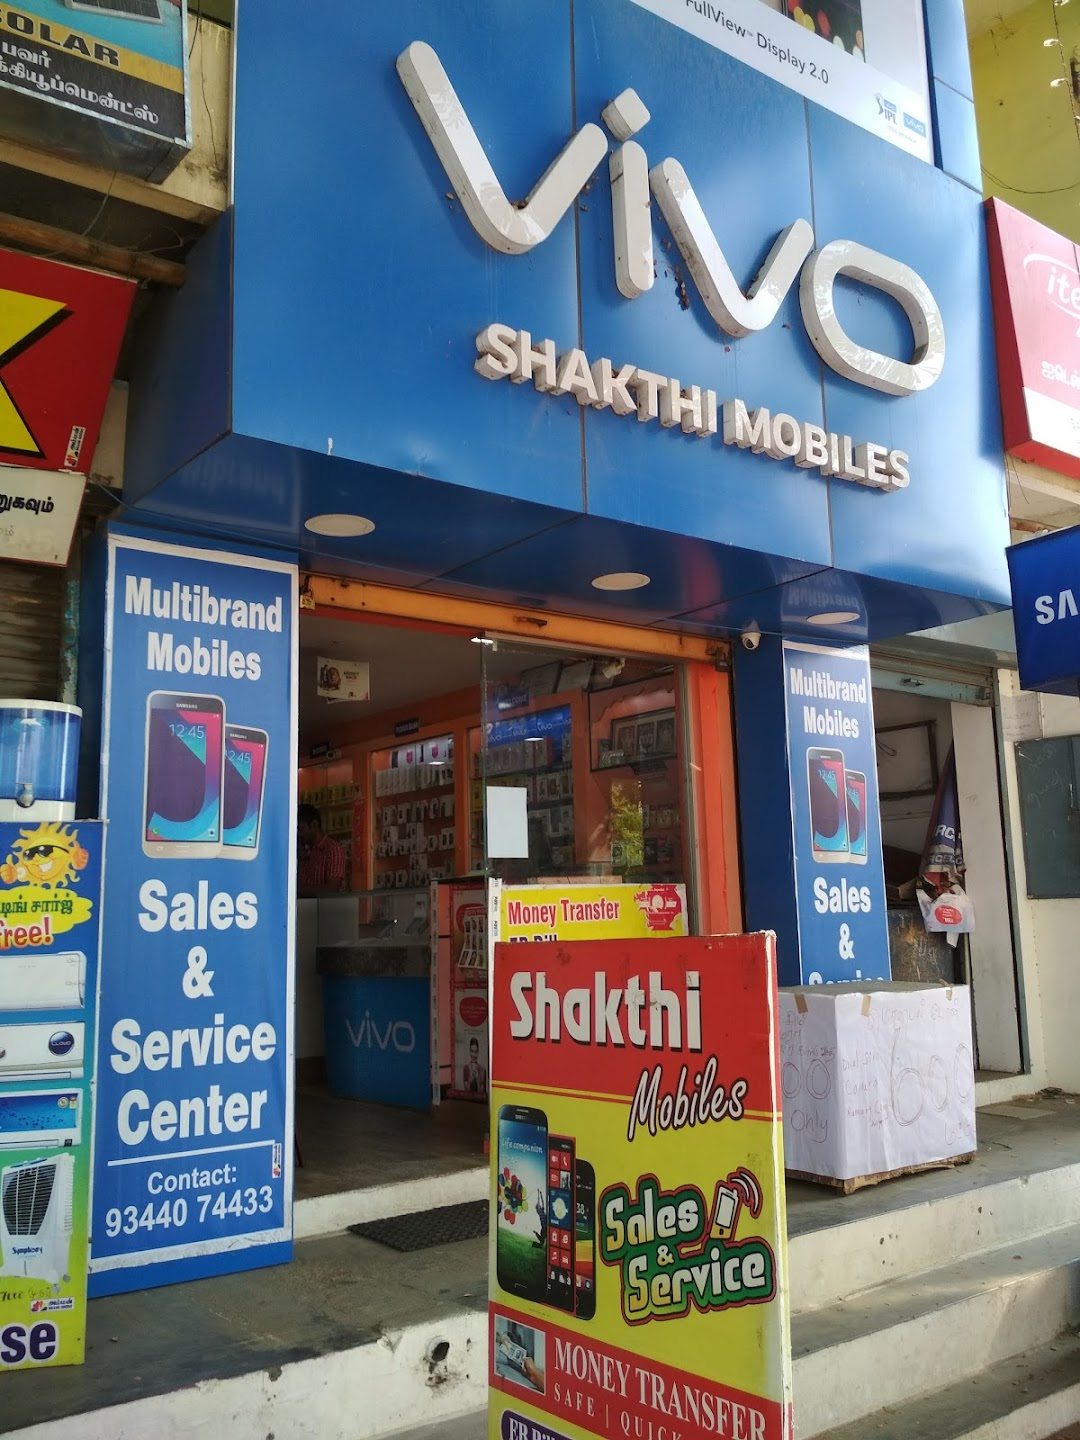 Shakthi Mobiles